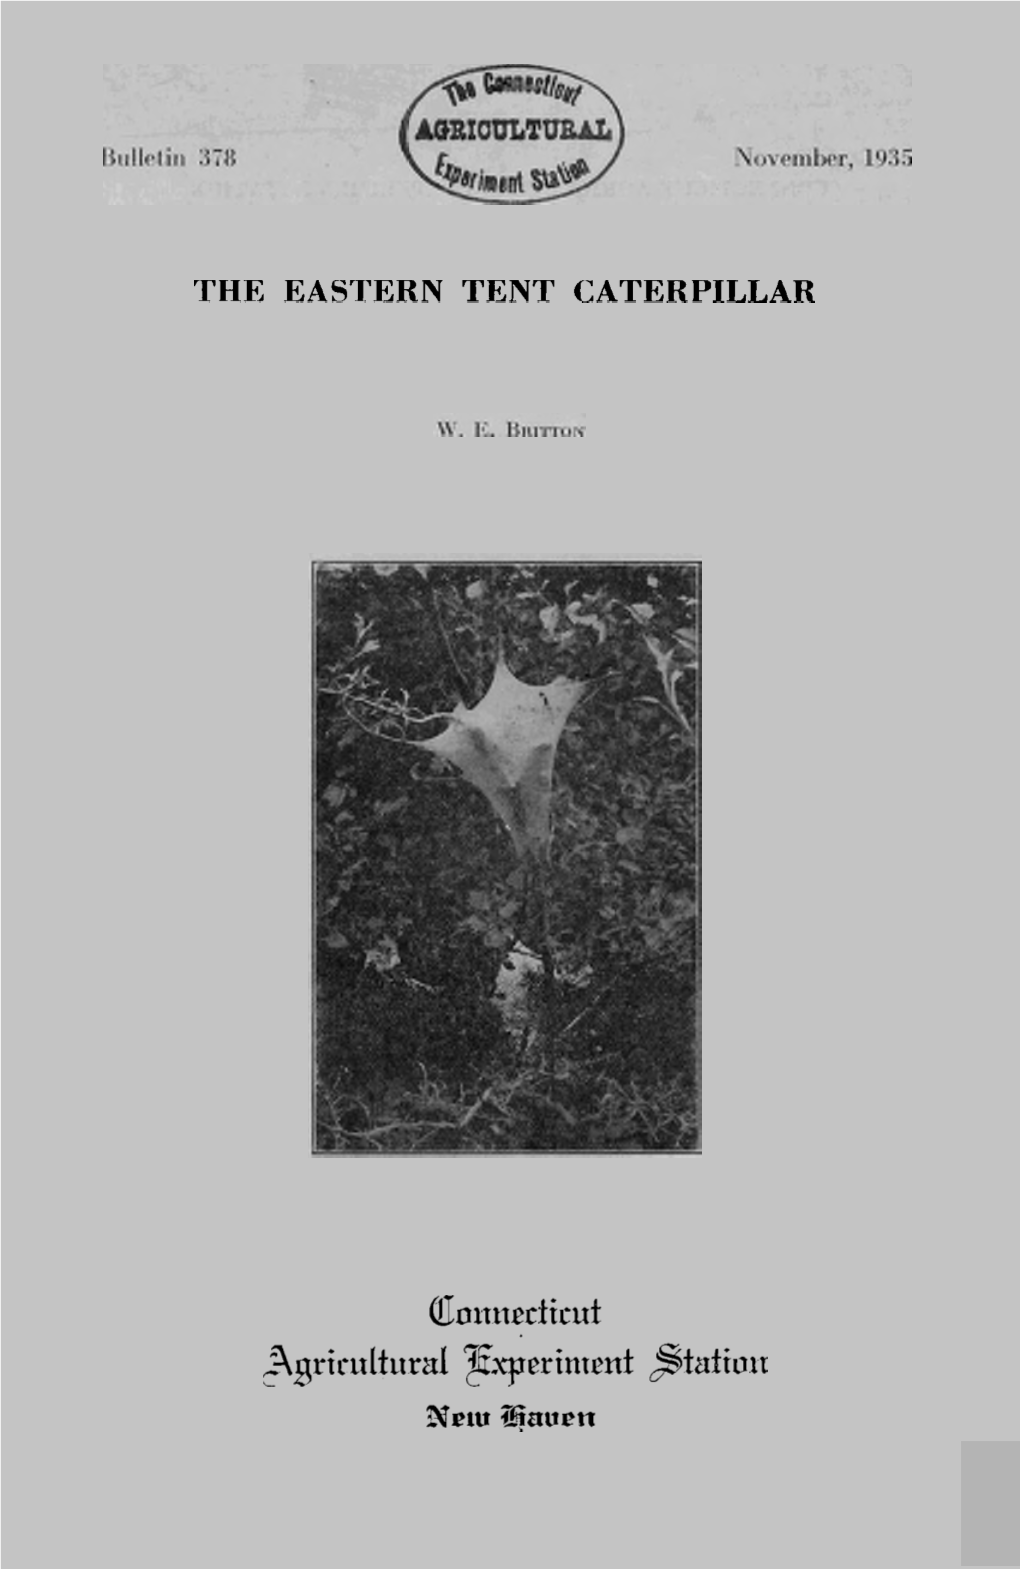 The Eastern Tent Caterpillar